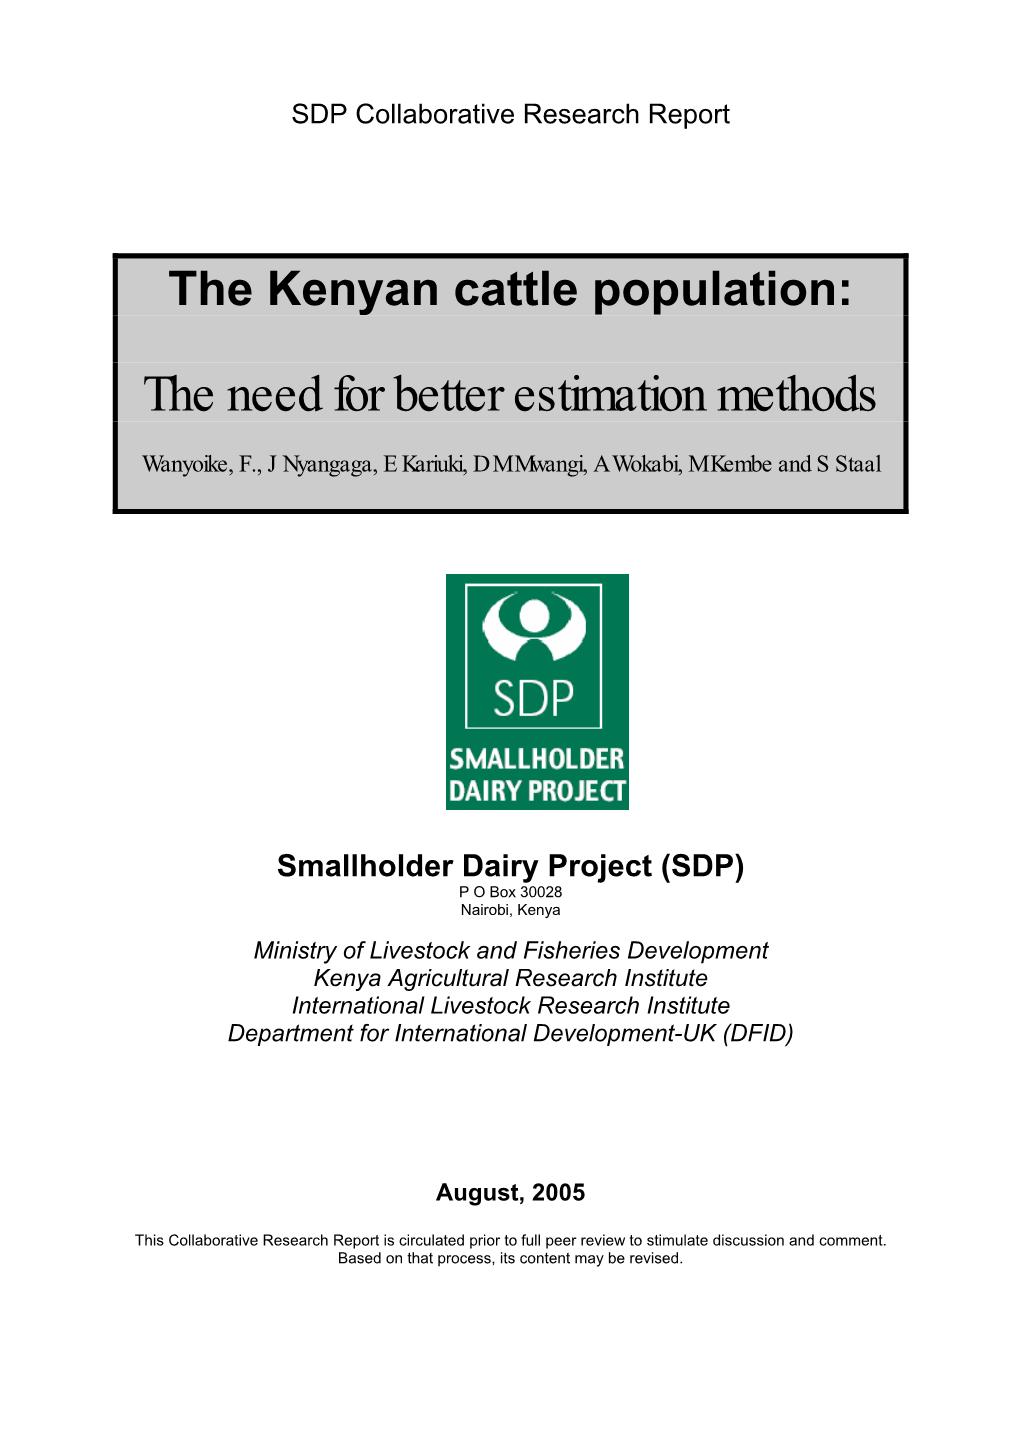 The Kenyan Cattle Population